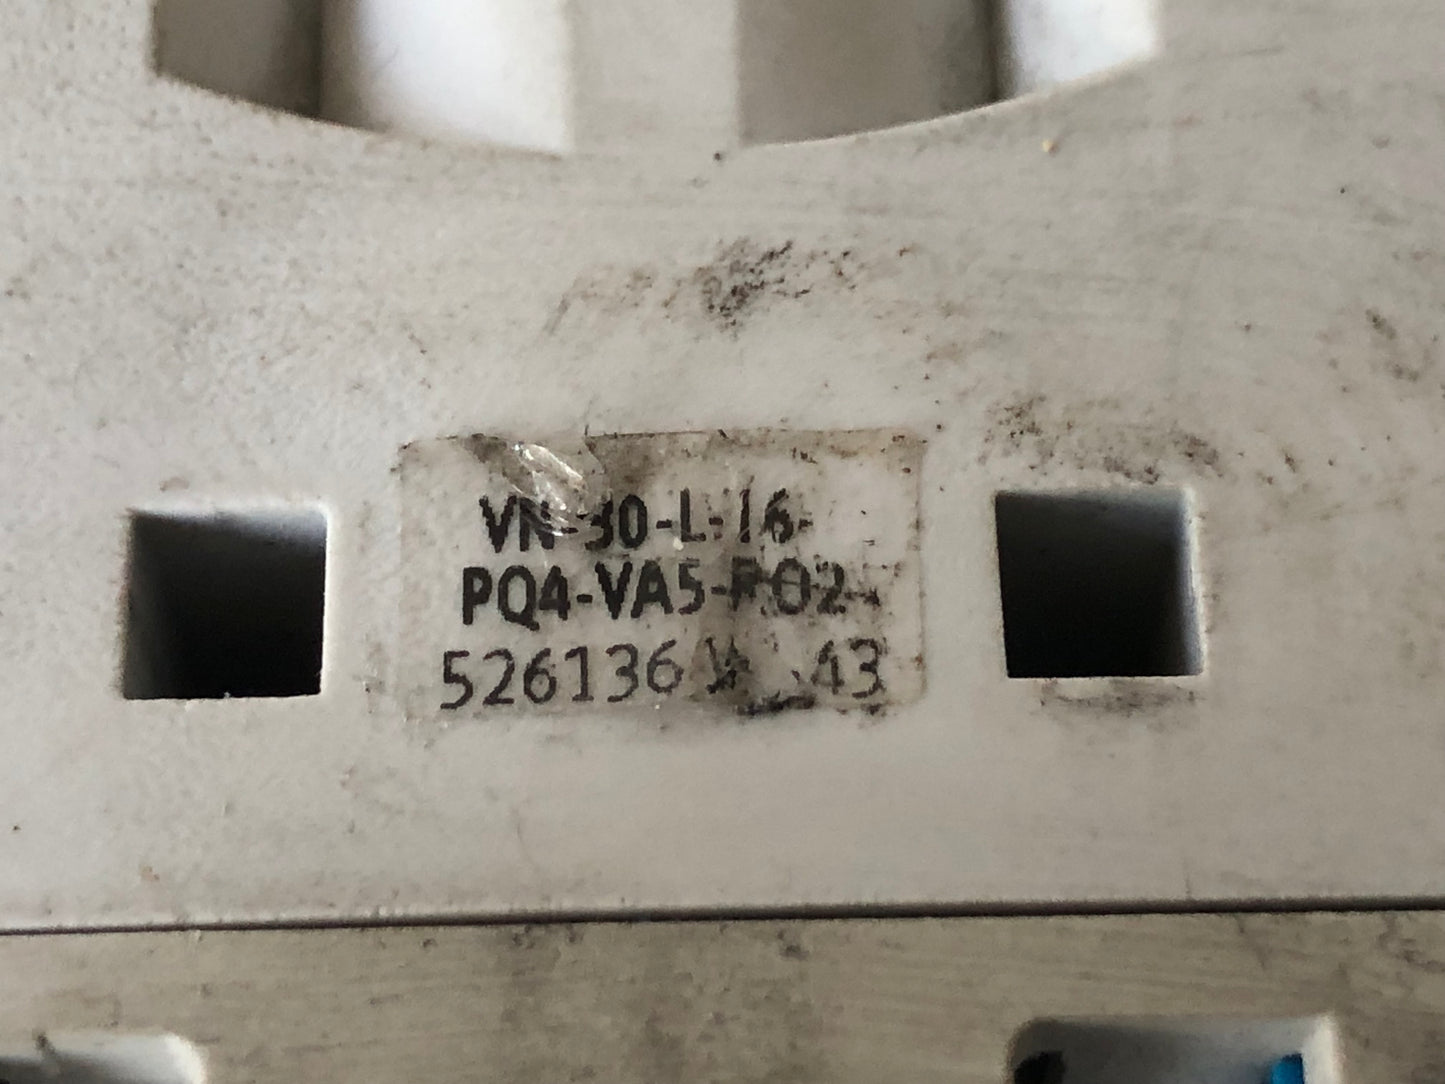 1x FESTO Vacuum Generator VN-30-L-16-PQ4-VA5-R02 526136